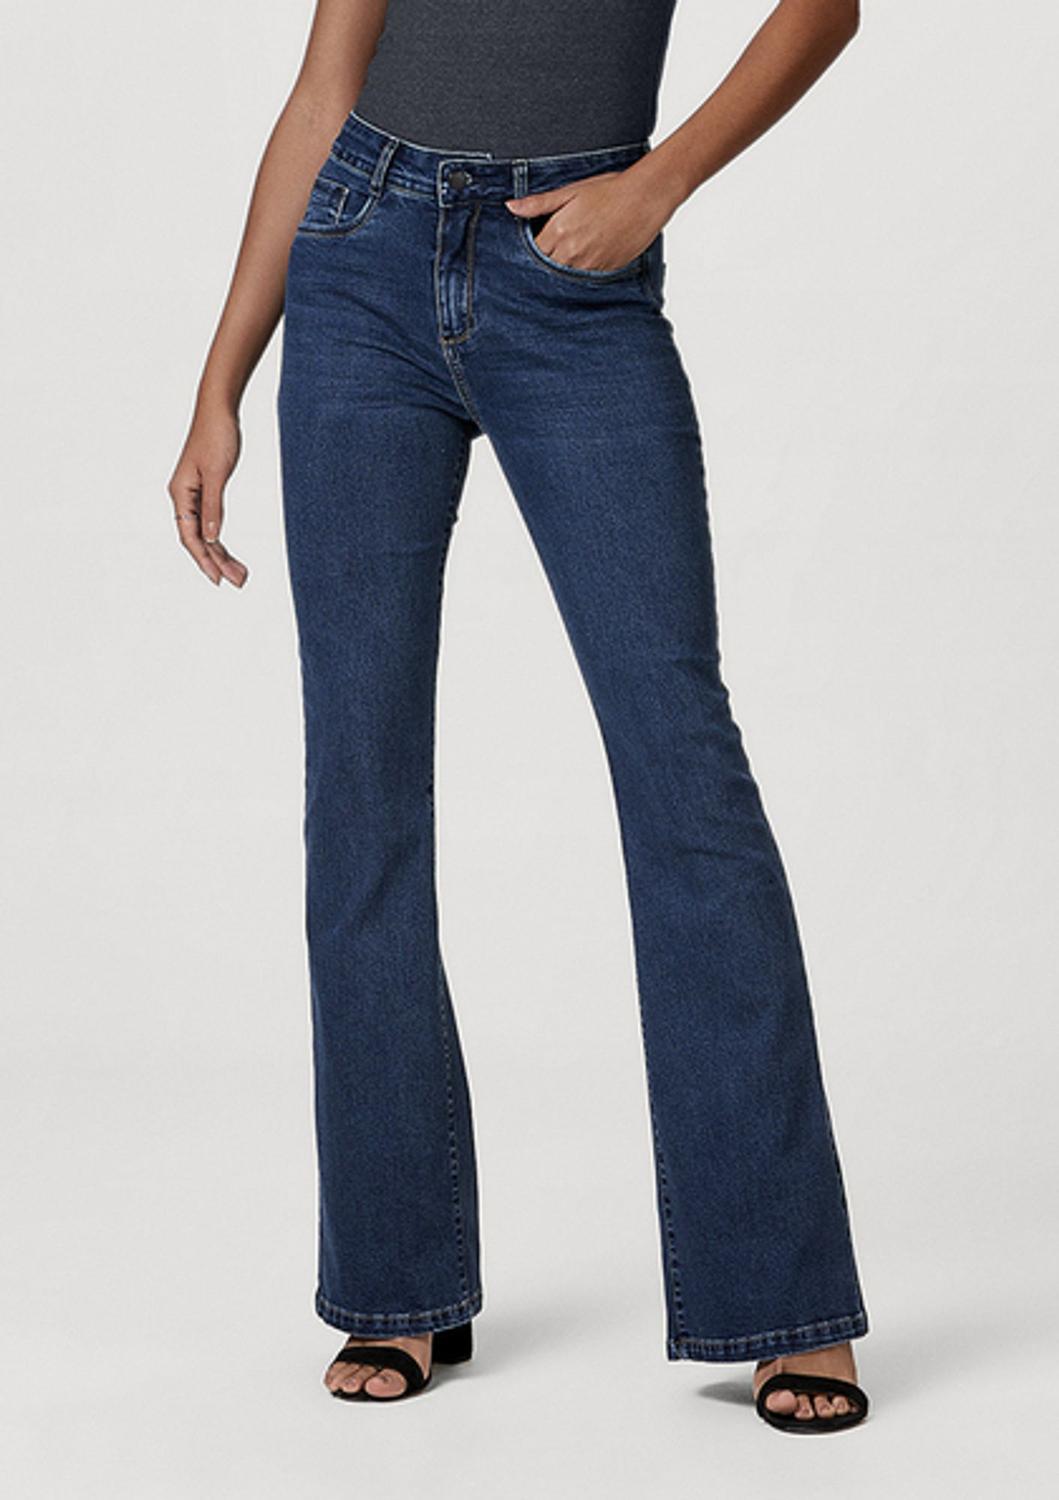 calca jeans feminina